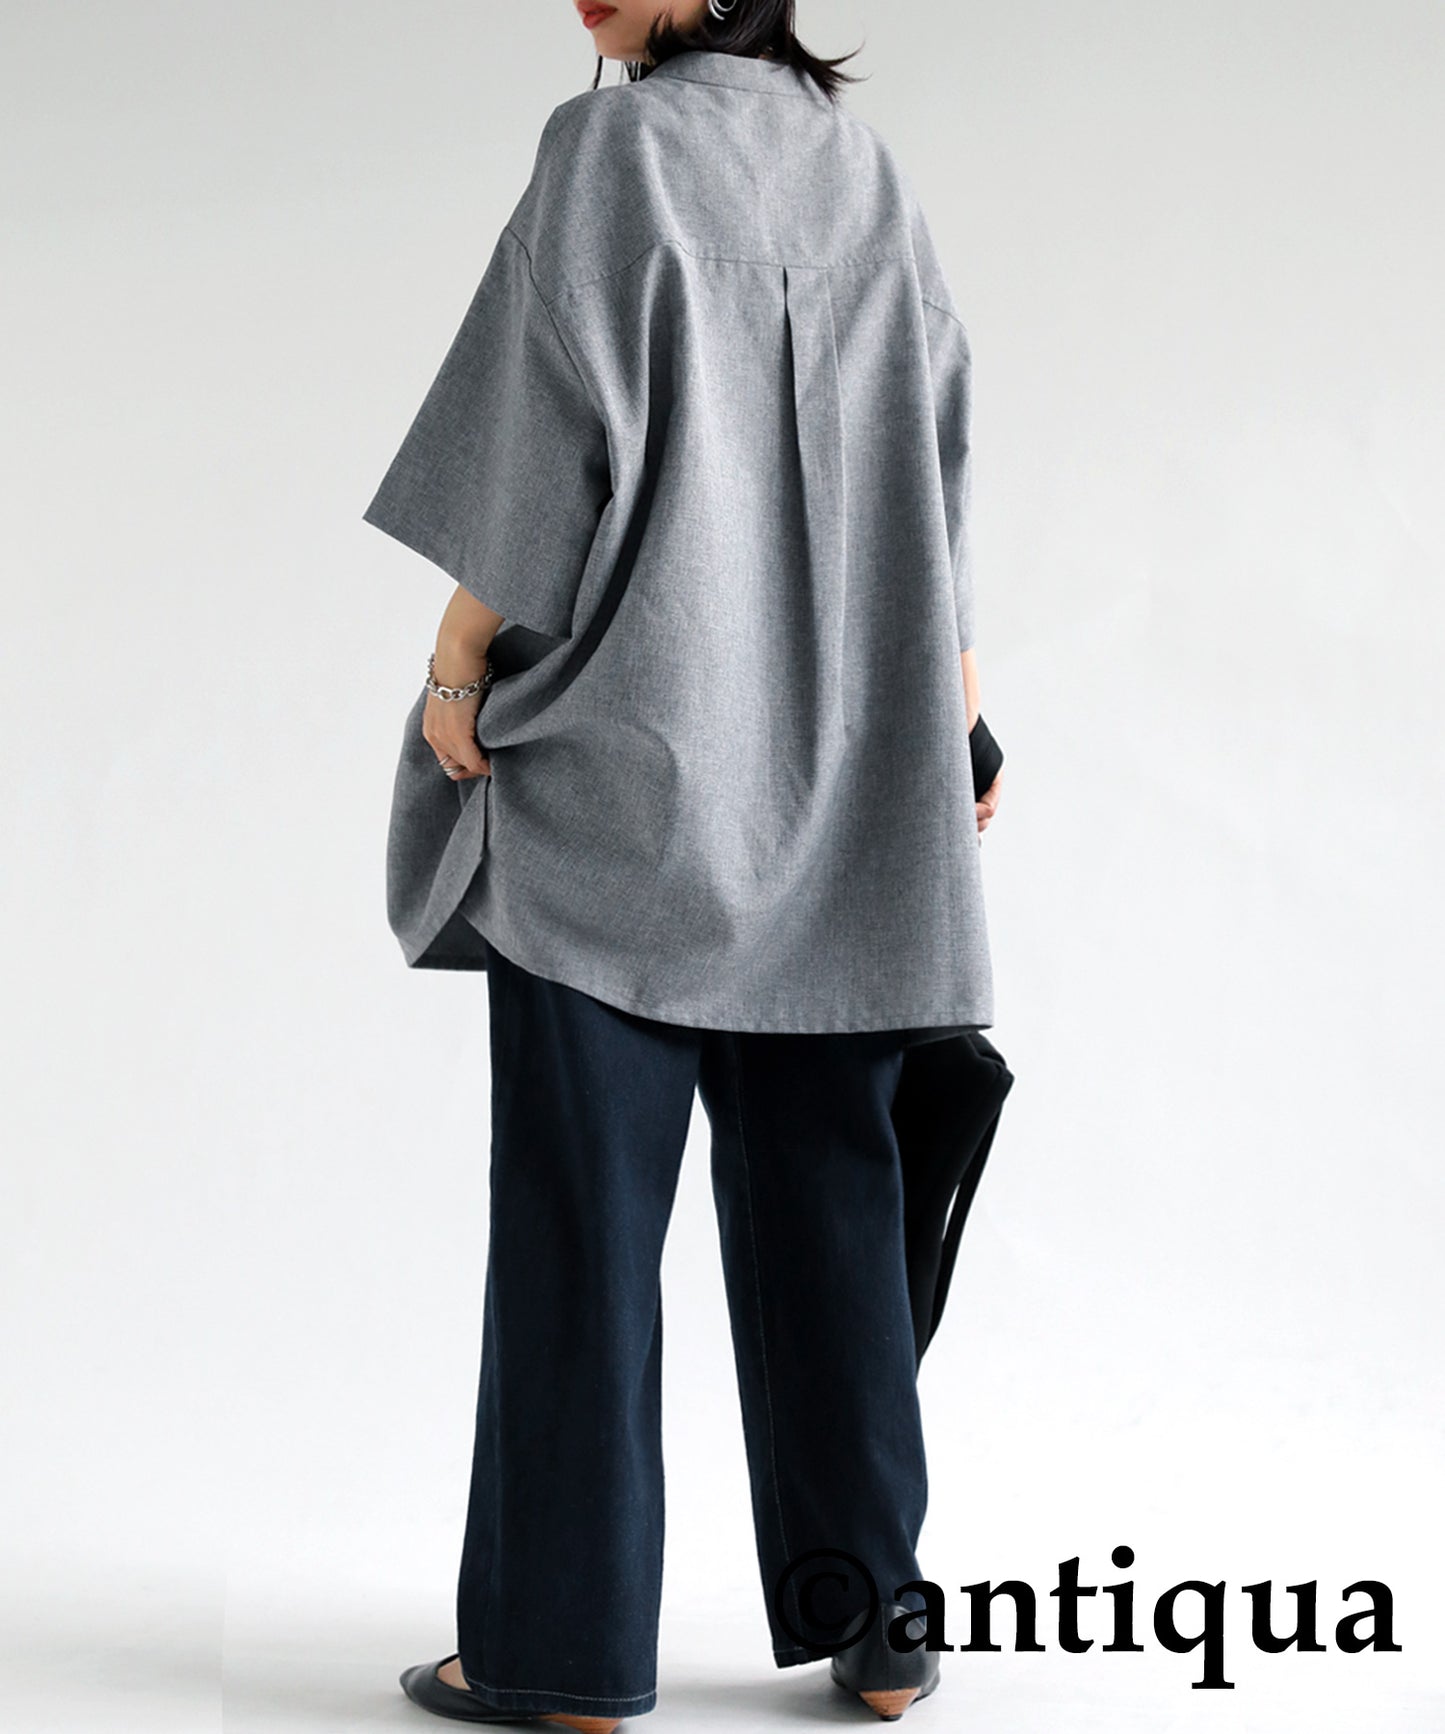 Linen Likes Ladies Shirt Ladies Tops Short-Sleeve Plain